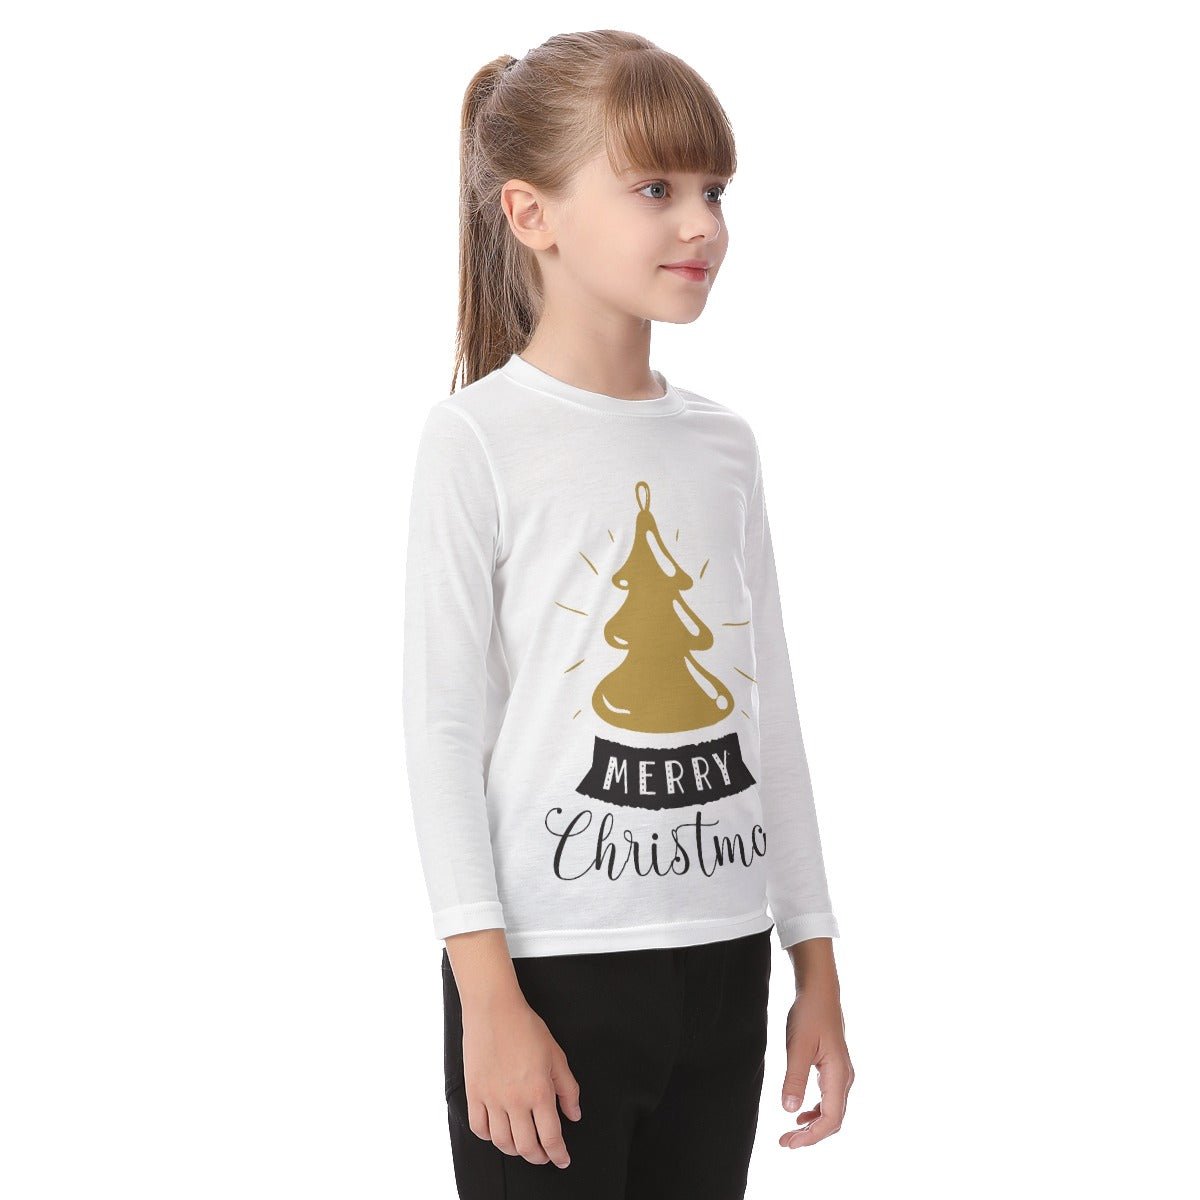 Kid's Long Sleeve Christmas T-shirt - Merry Christmas - Gold Tree - Festive Style